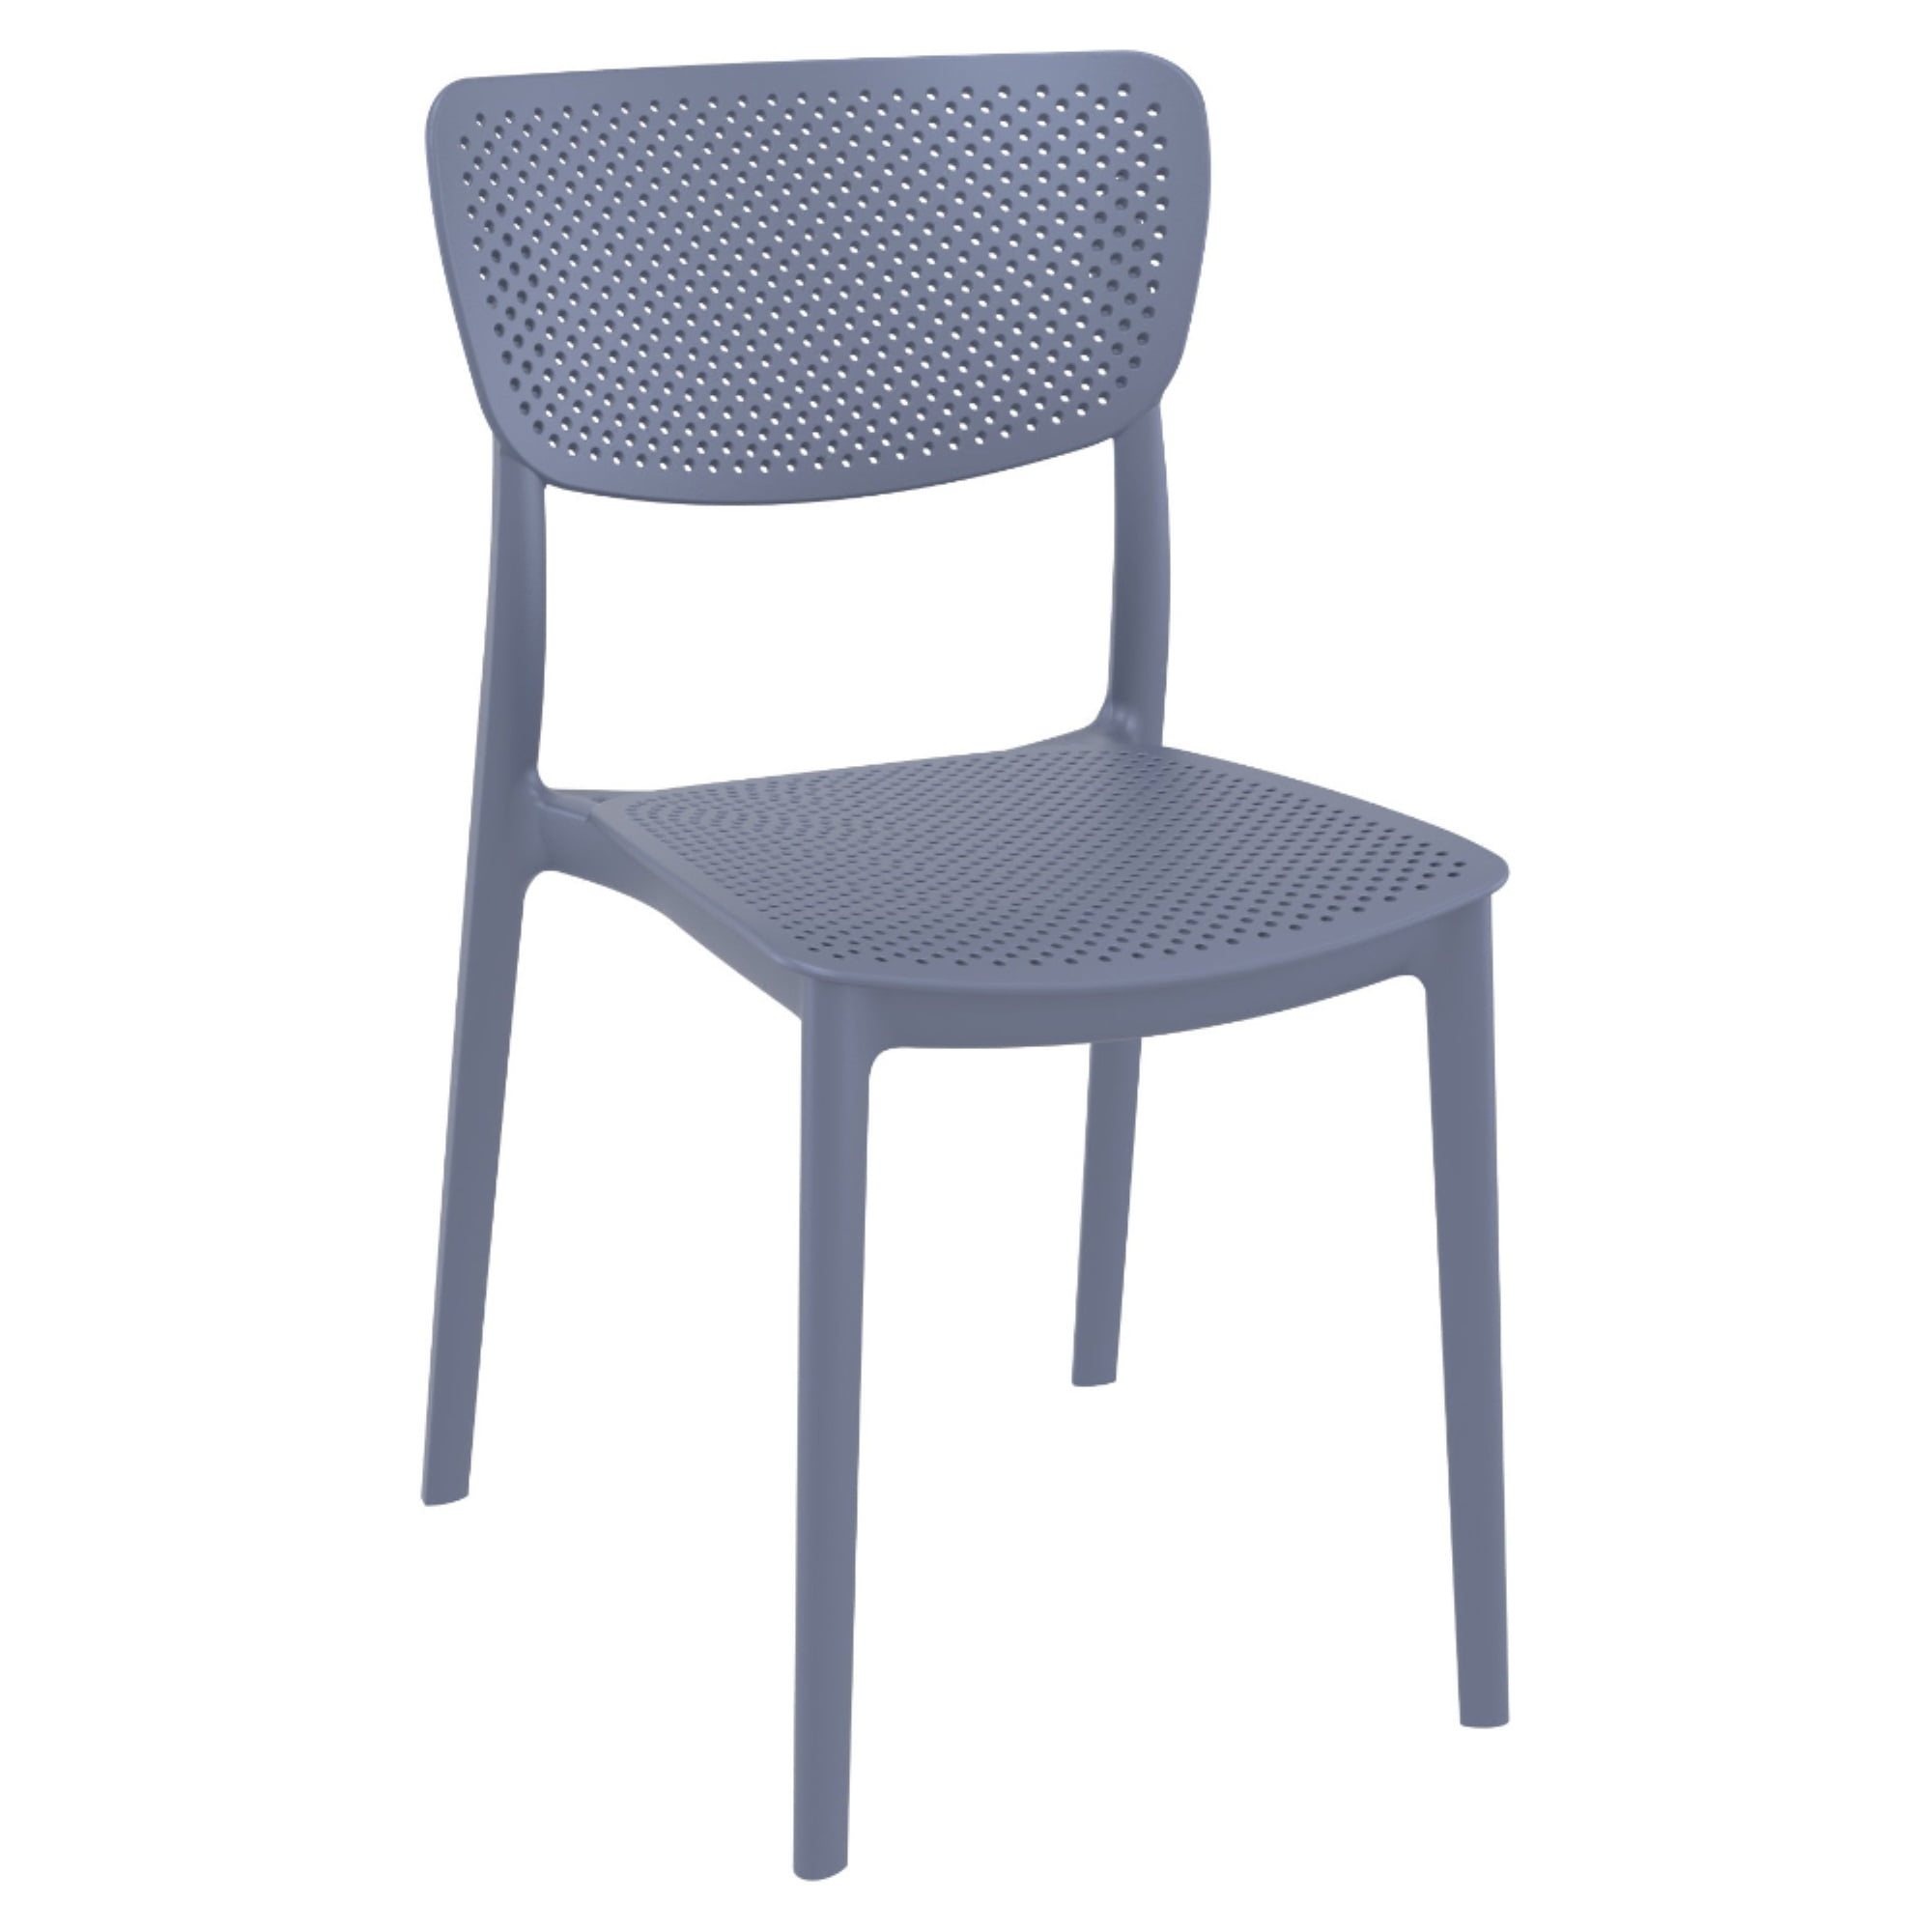 Isp129-dgr Lucy Outdoor Dining Chair - Dark Gray